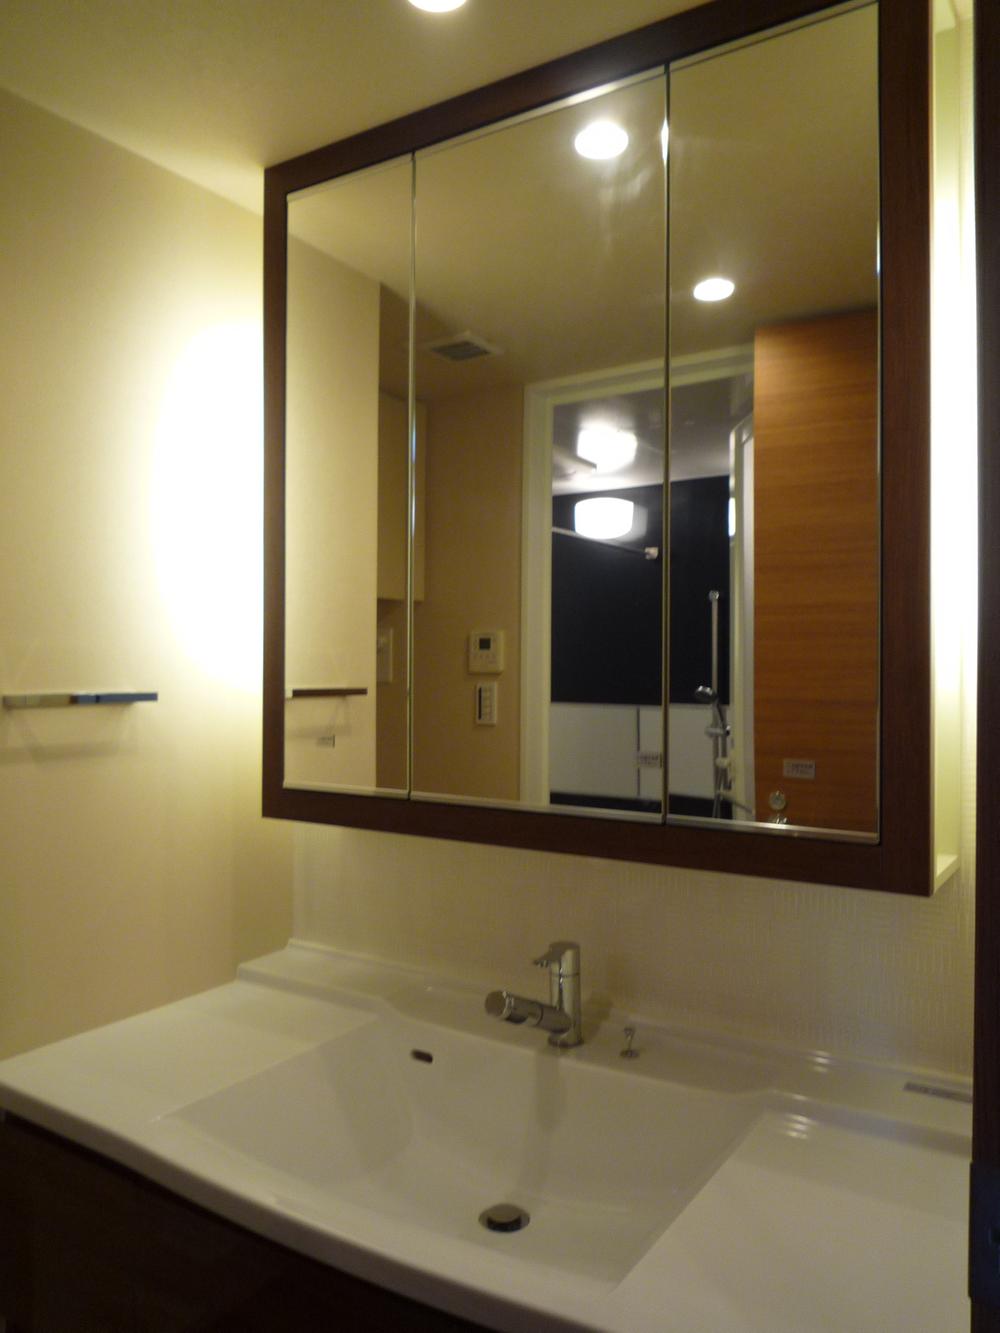 Wash basin, toilet. Inside storage ・ Wash basin of three-sided mirror finish (2013 October shooting)